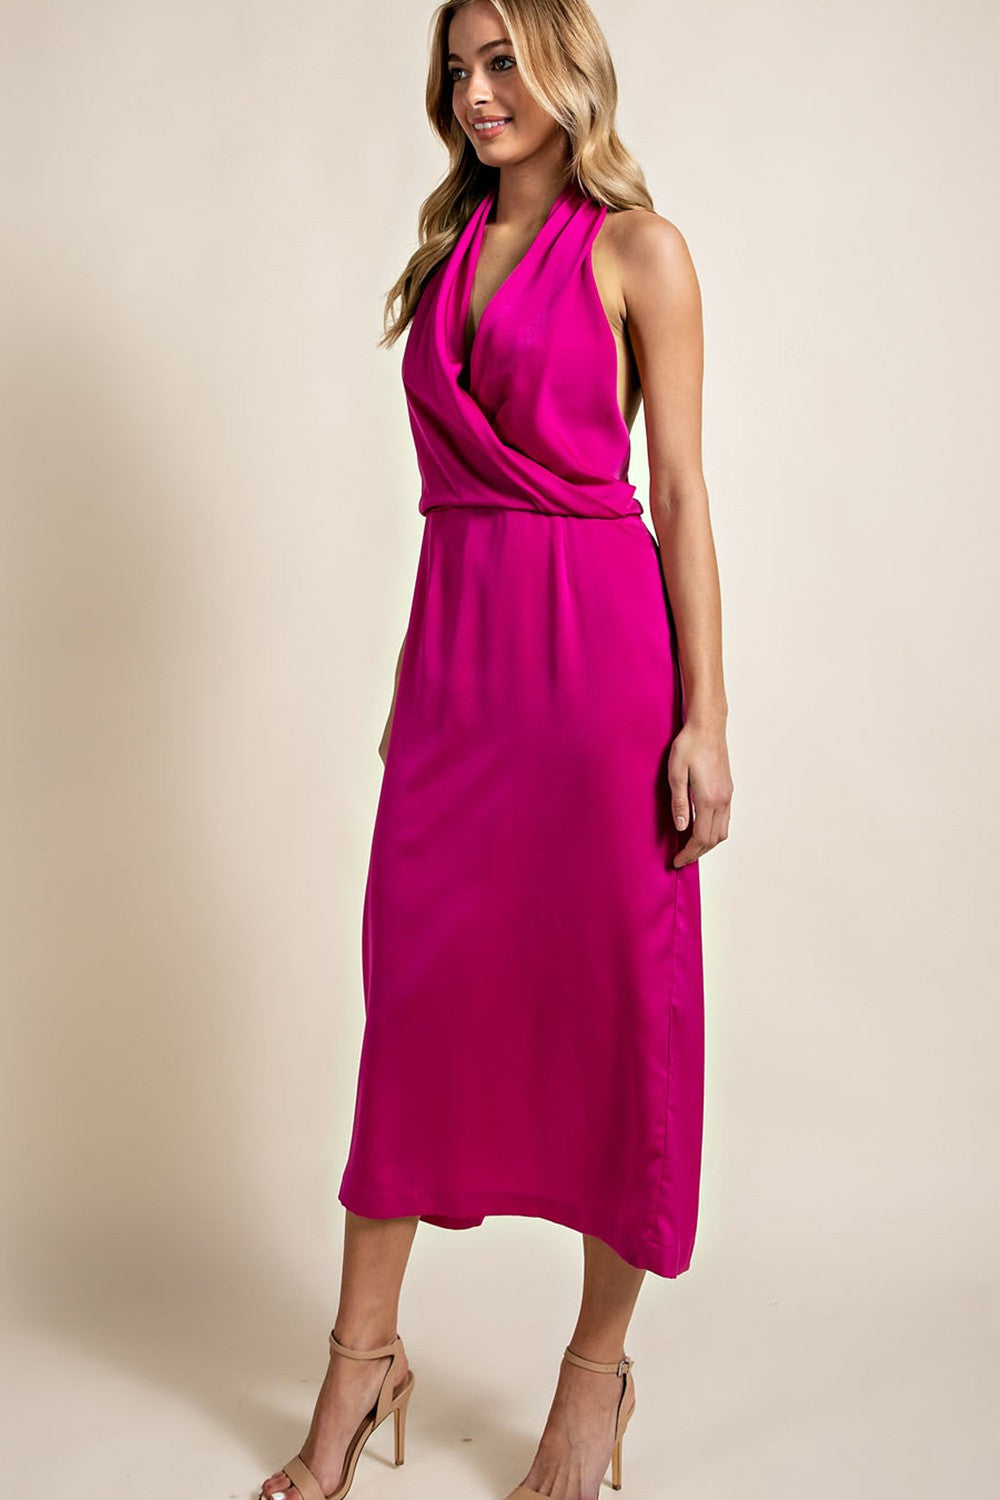 Satin Open Back Sleeveless Maxi Dress - Hot Pink